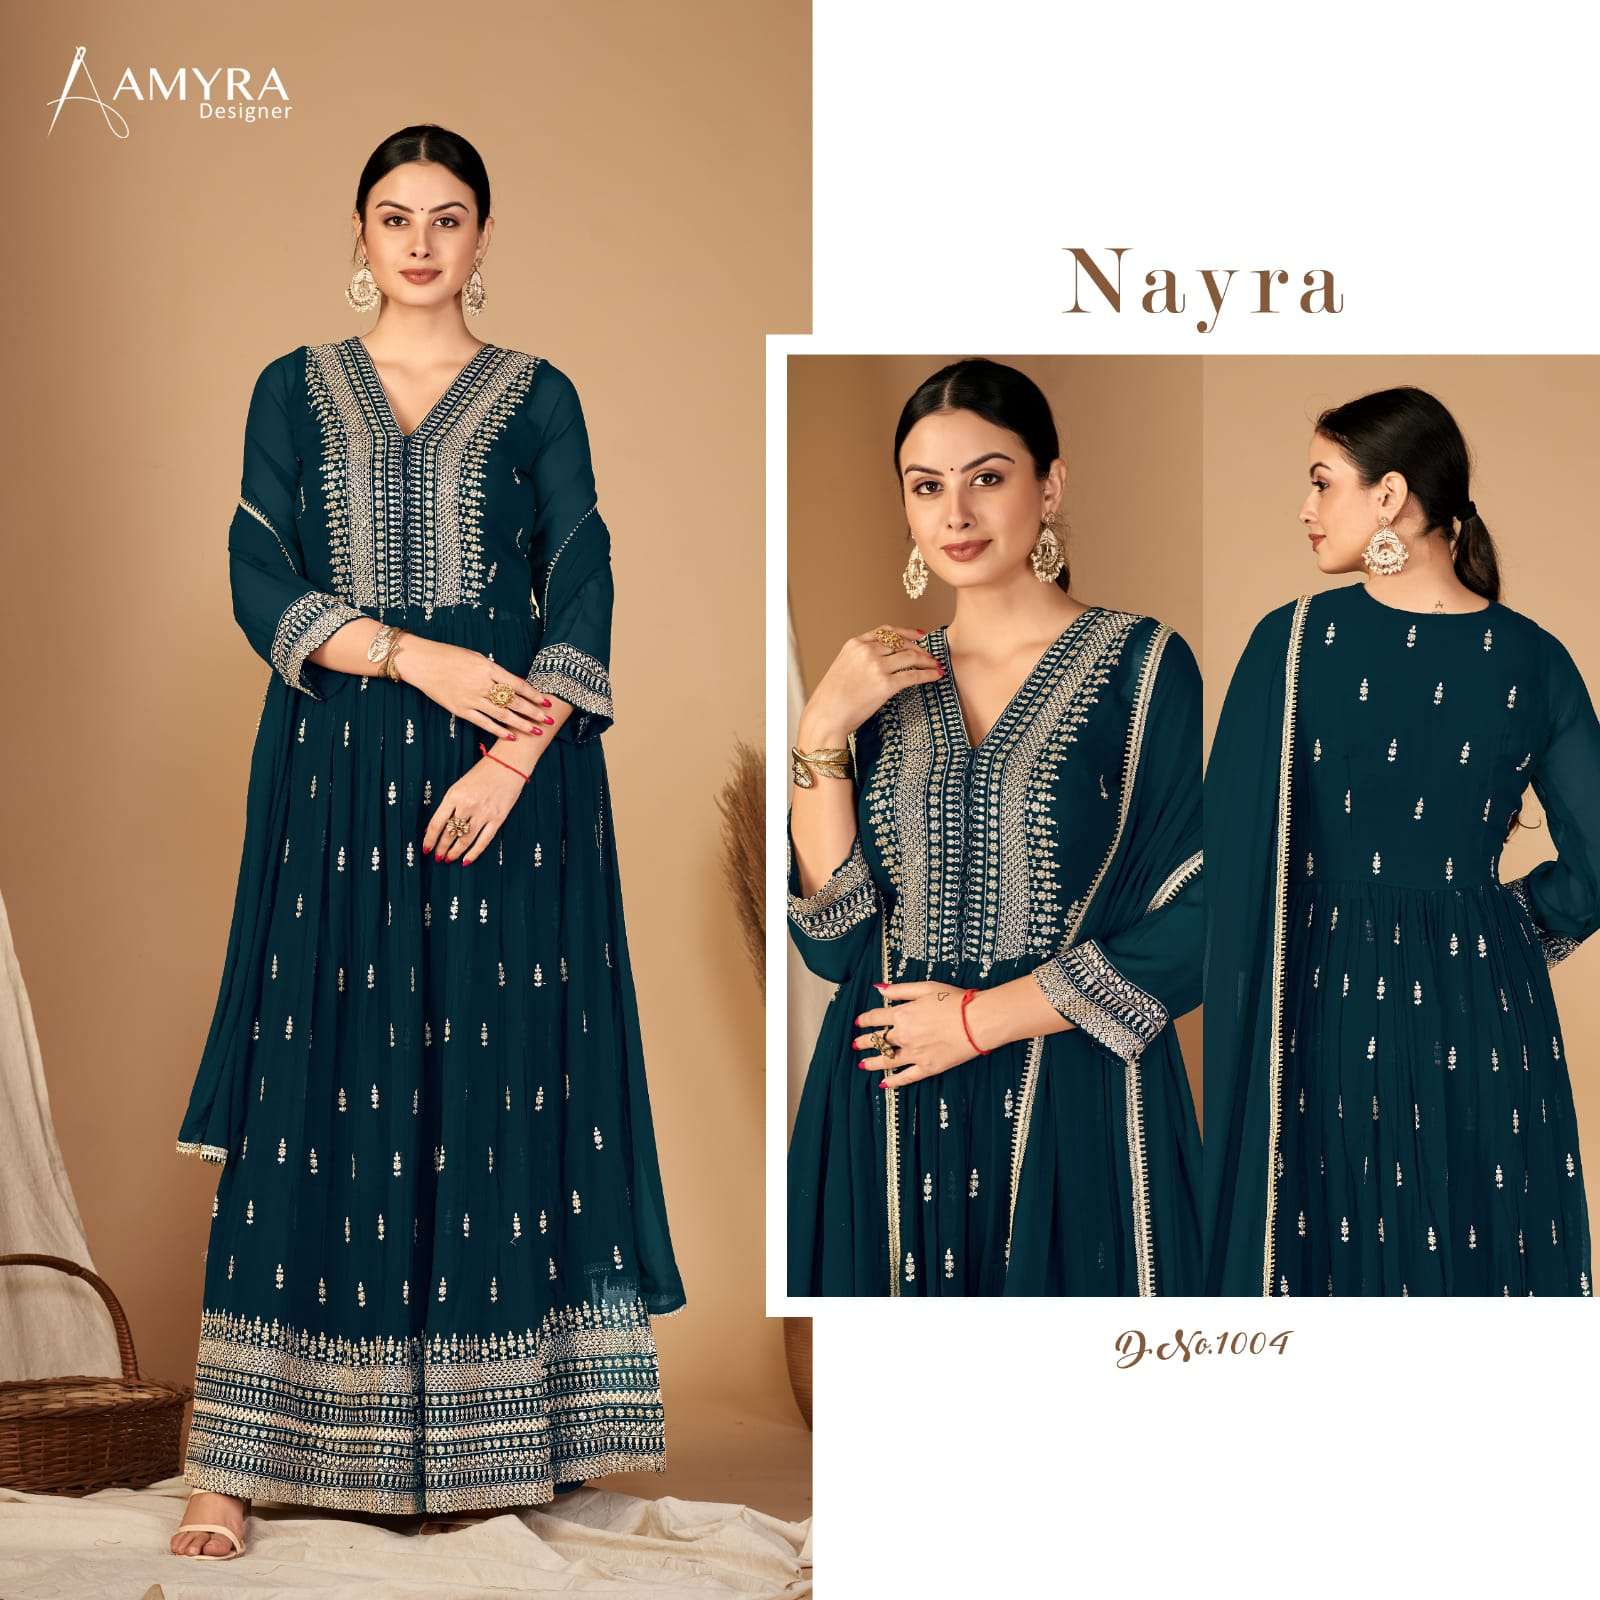 aamyra designer nayra 1001-1004 series georgette embroidered designer suits collection surat